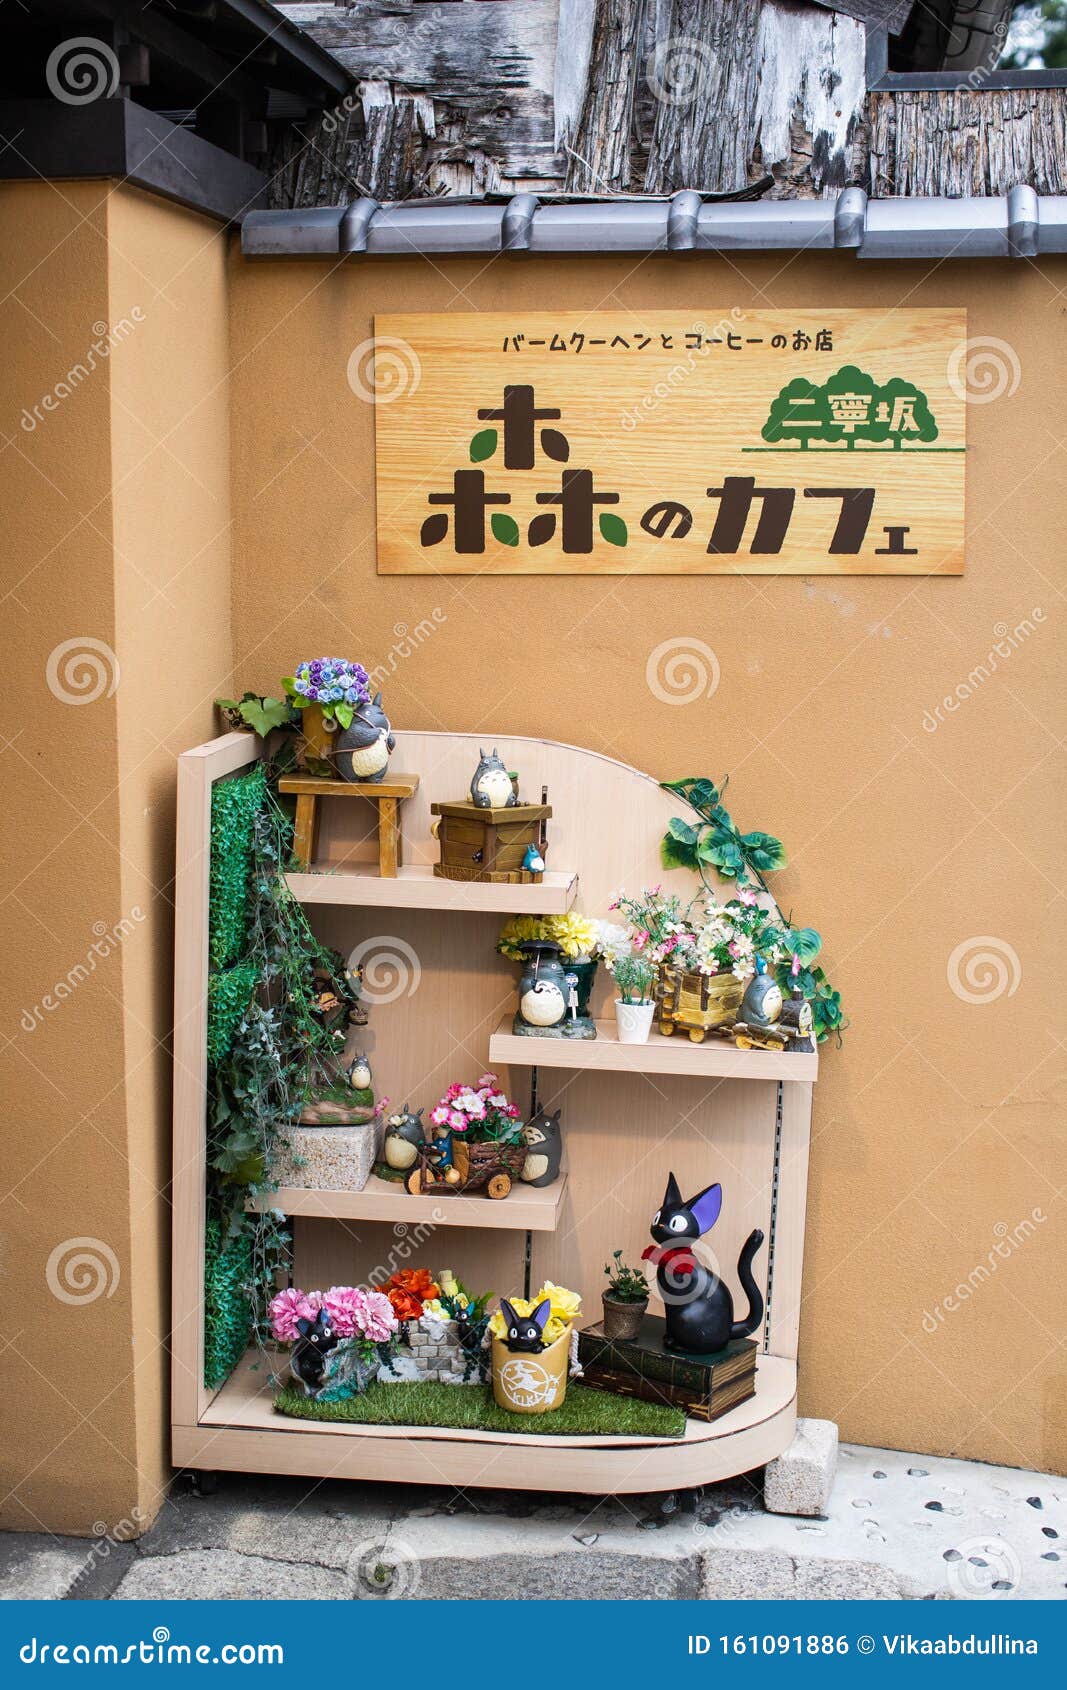 My Neighbor Totoro Figure in Donguri Kyouwakoku Store in Gion District,  Kyoto, Japan Editorial Photo - Image of animation, kyouwakoku: 161091886